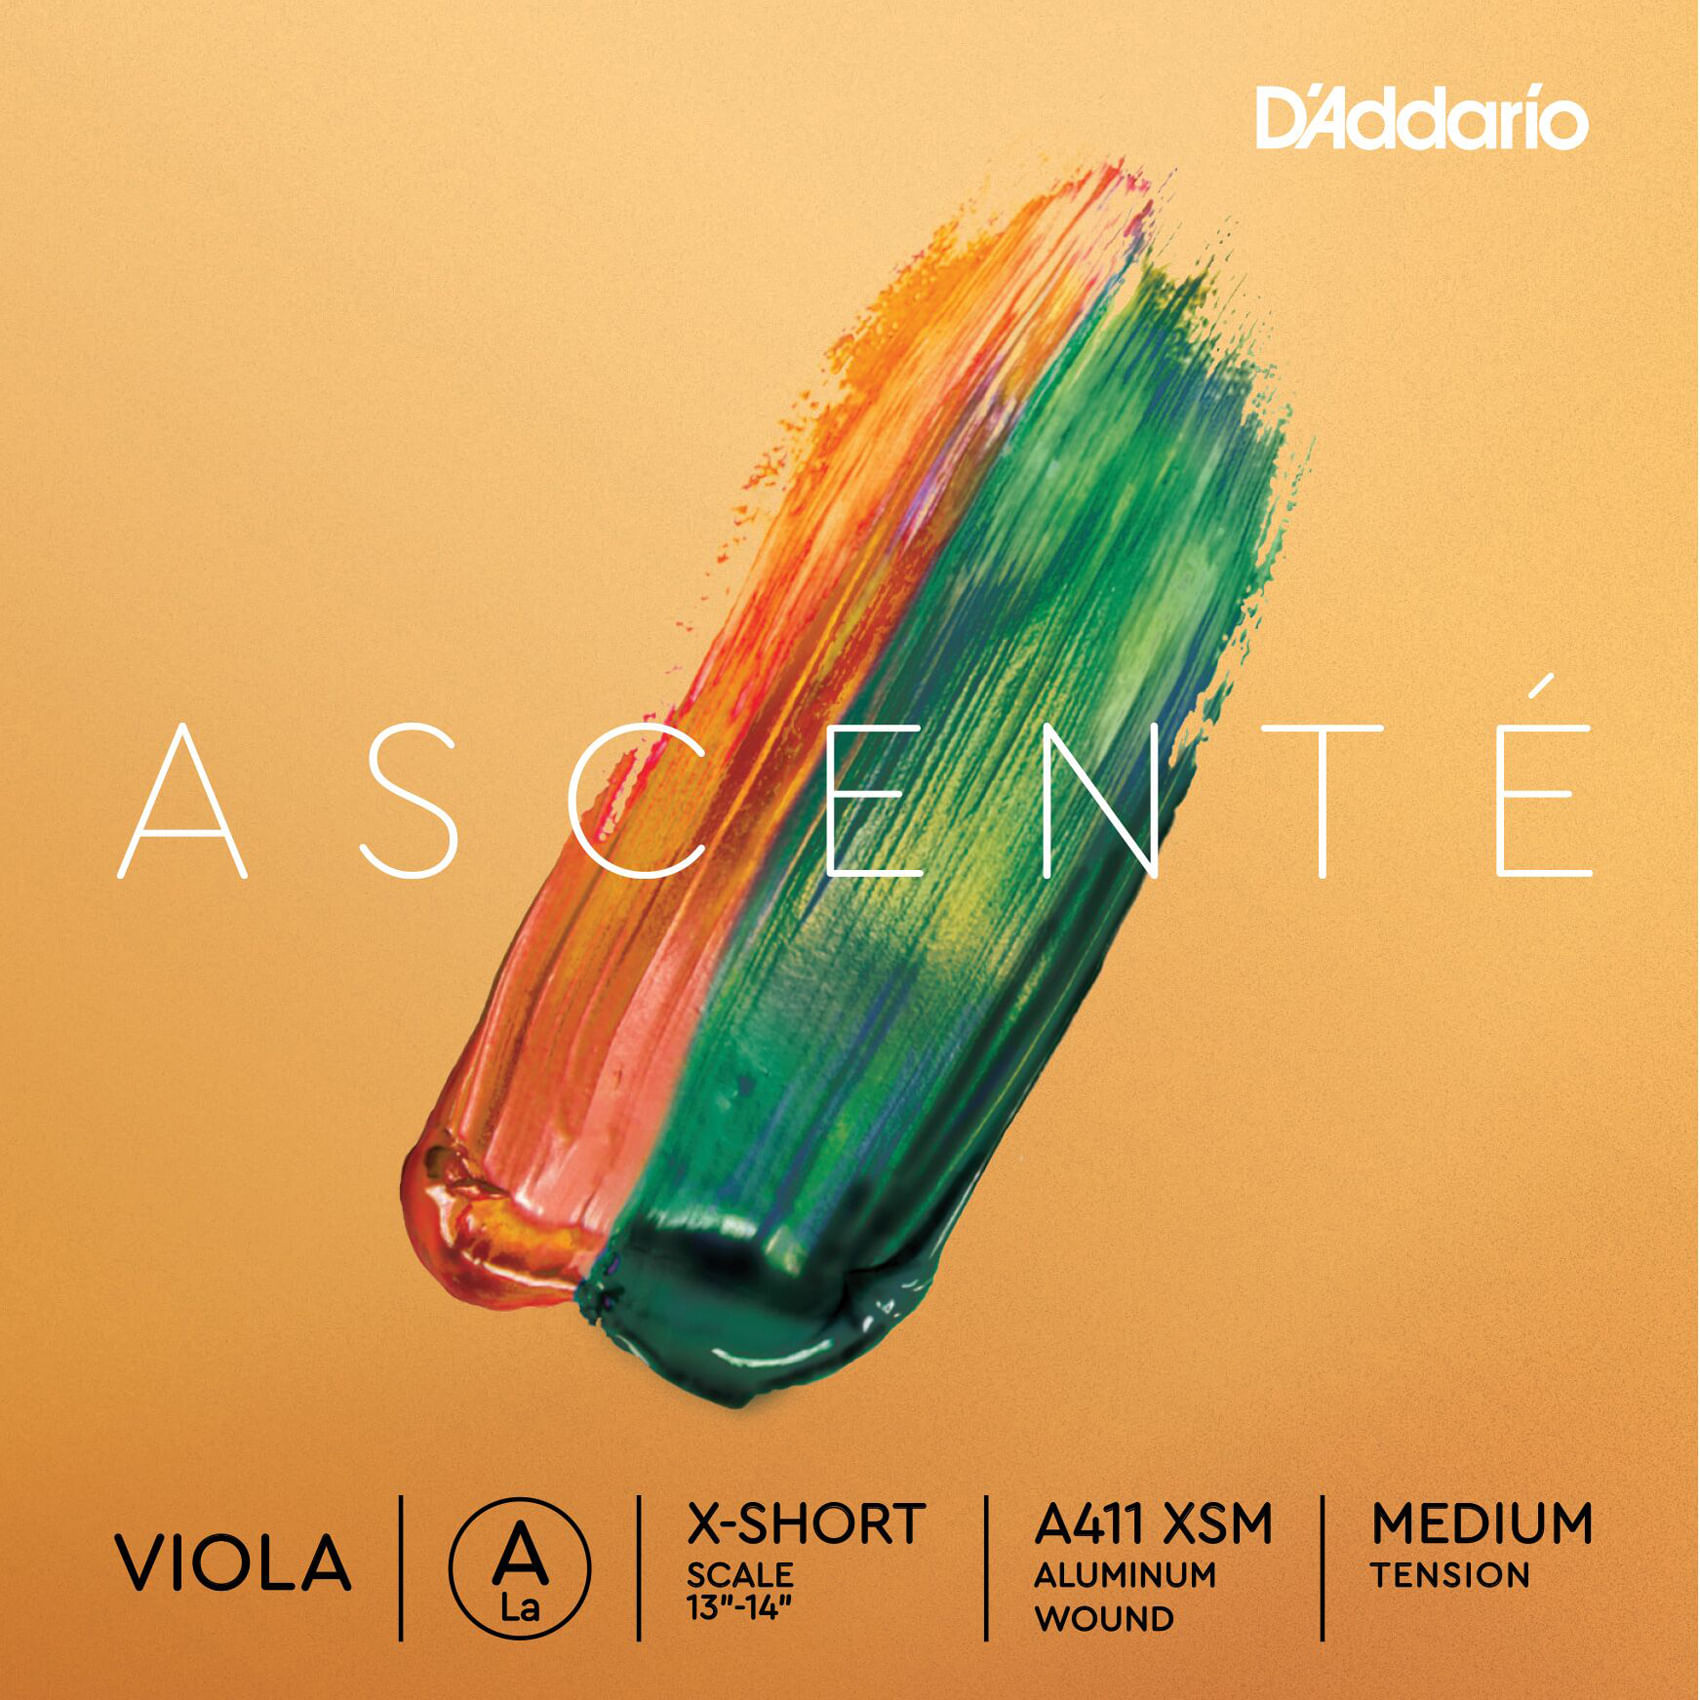 D'Addario A411 Ascente Single A Viola String - Extra Short, Medium